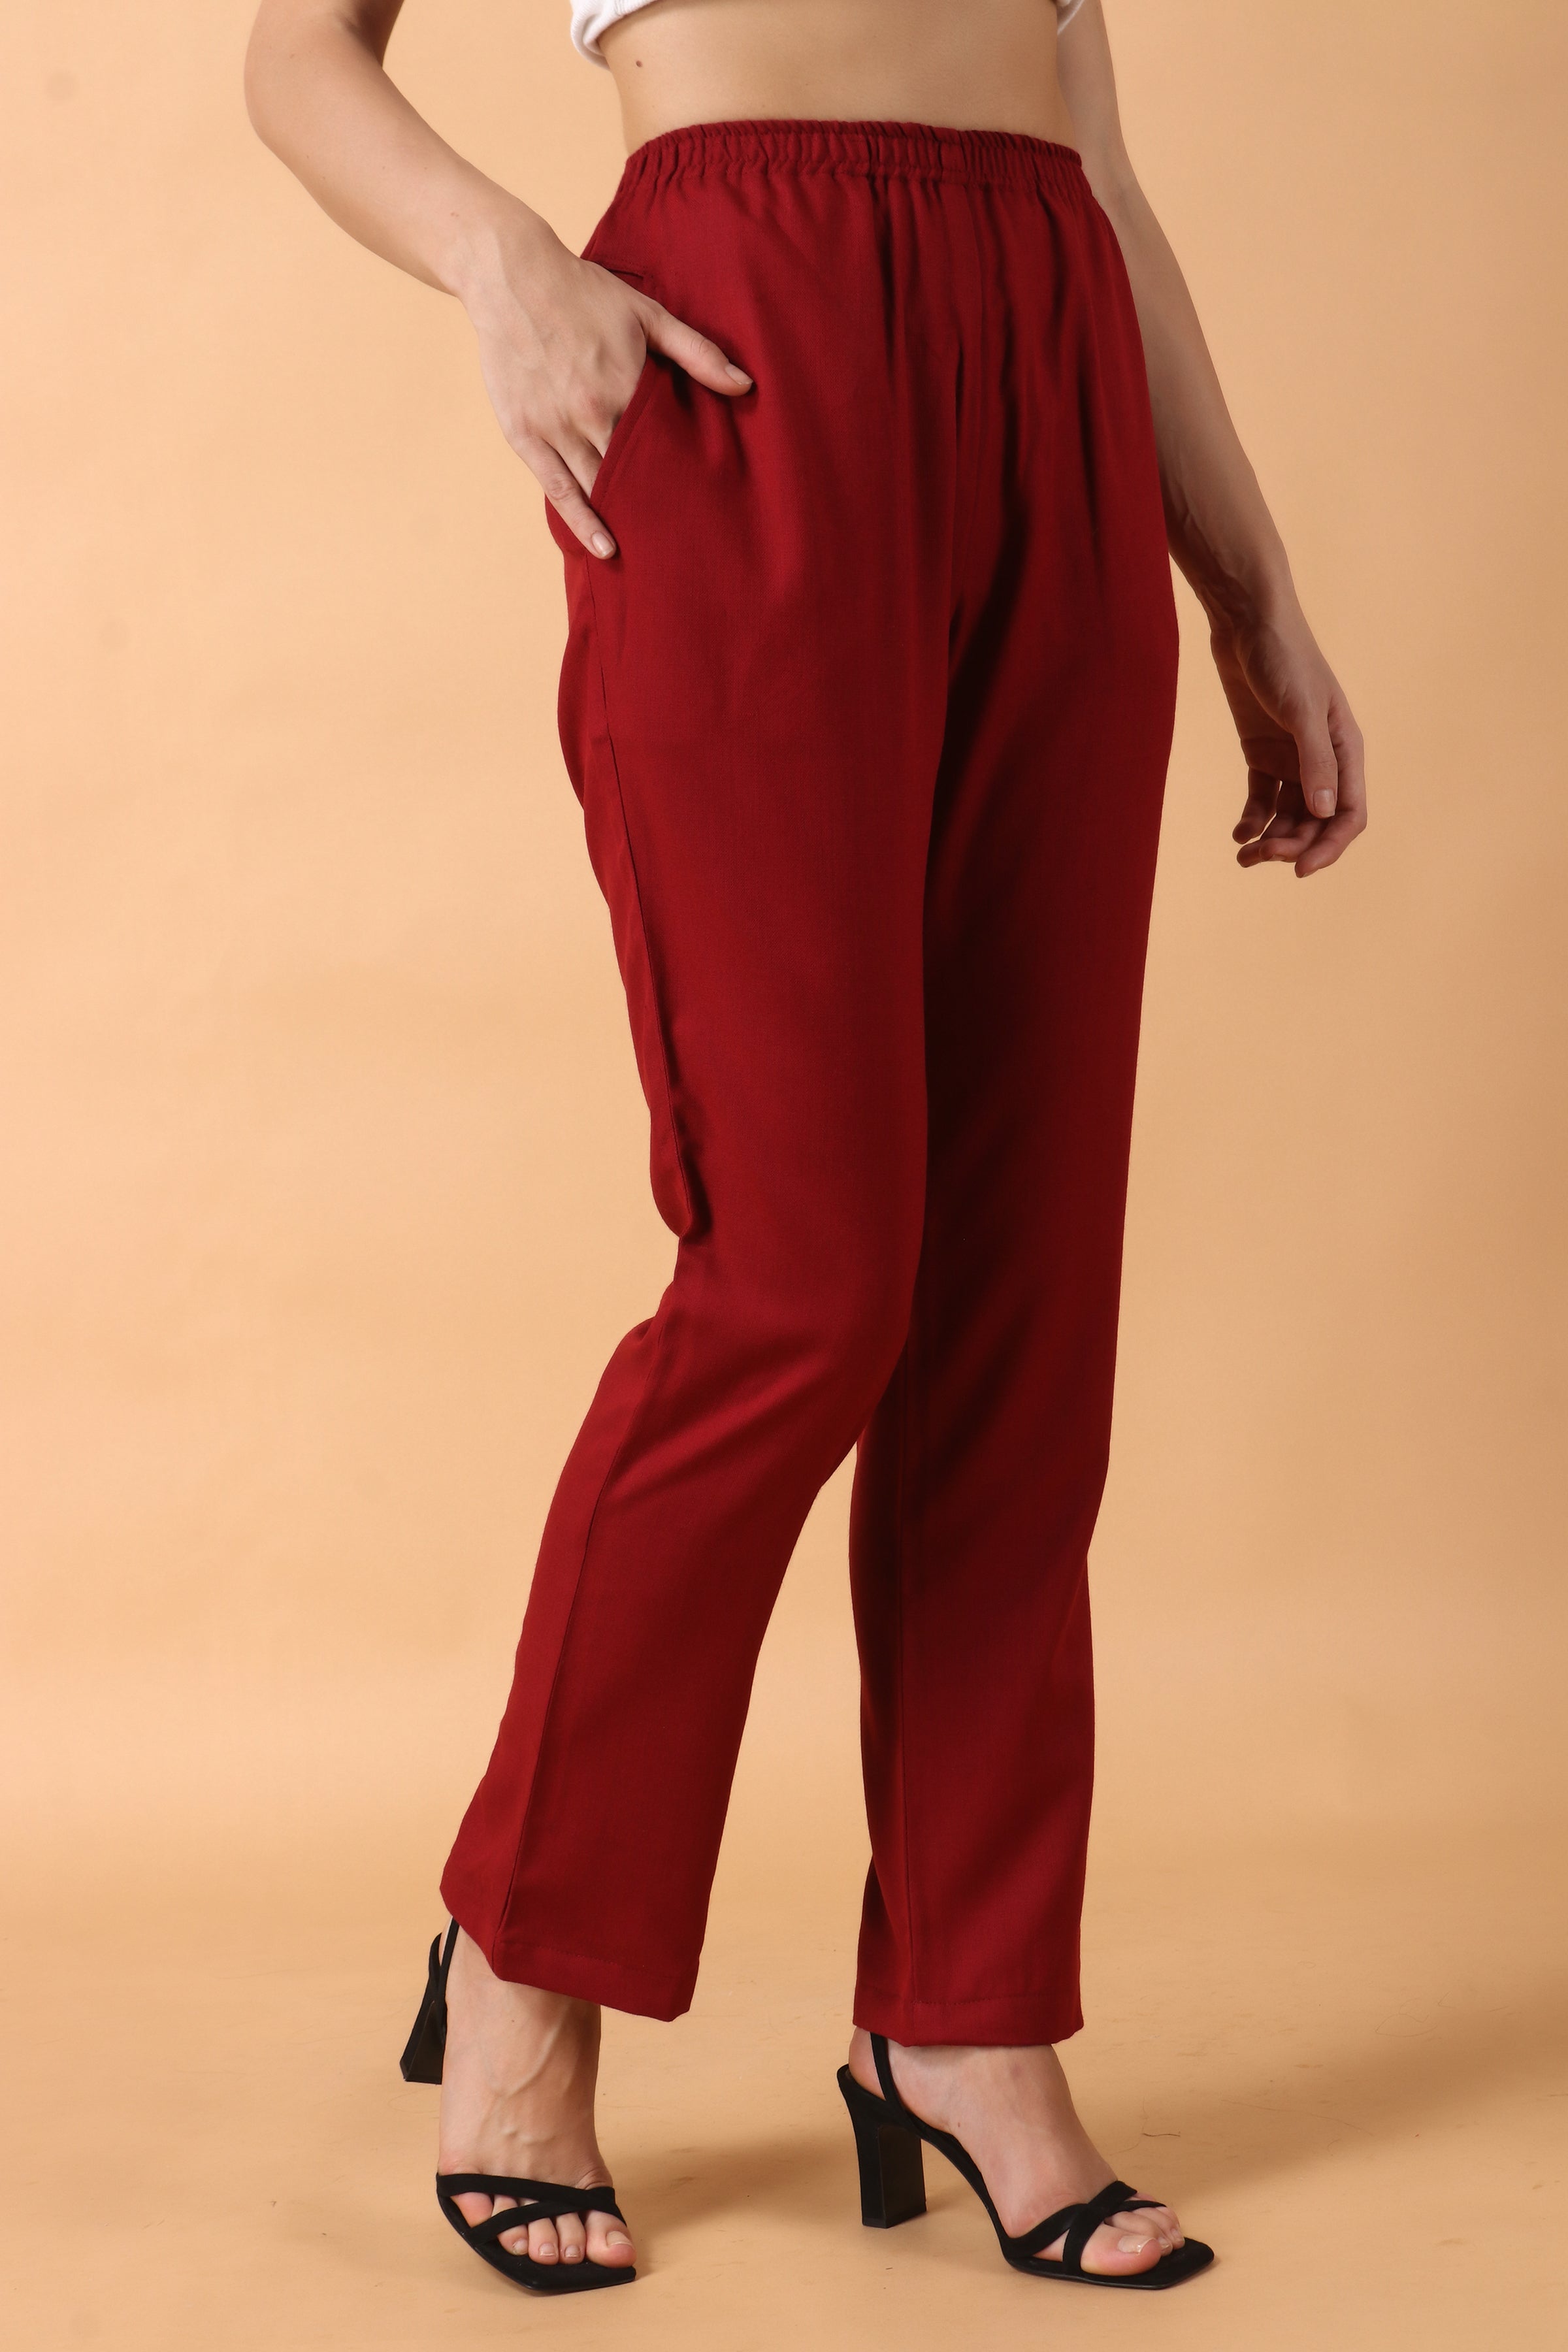 Buy Style Prezone Women's Woolen Pants for Winter Wear Casual Warm Leggings  White 2XL at Amazon.in